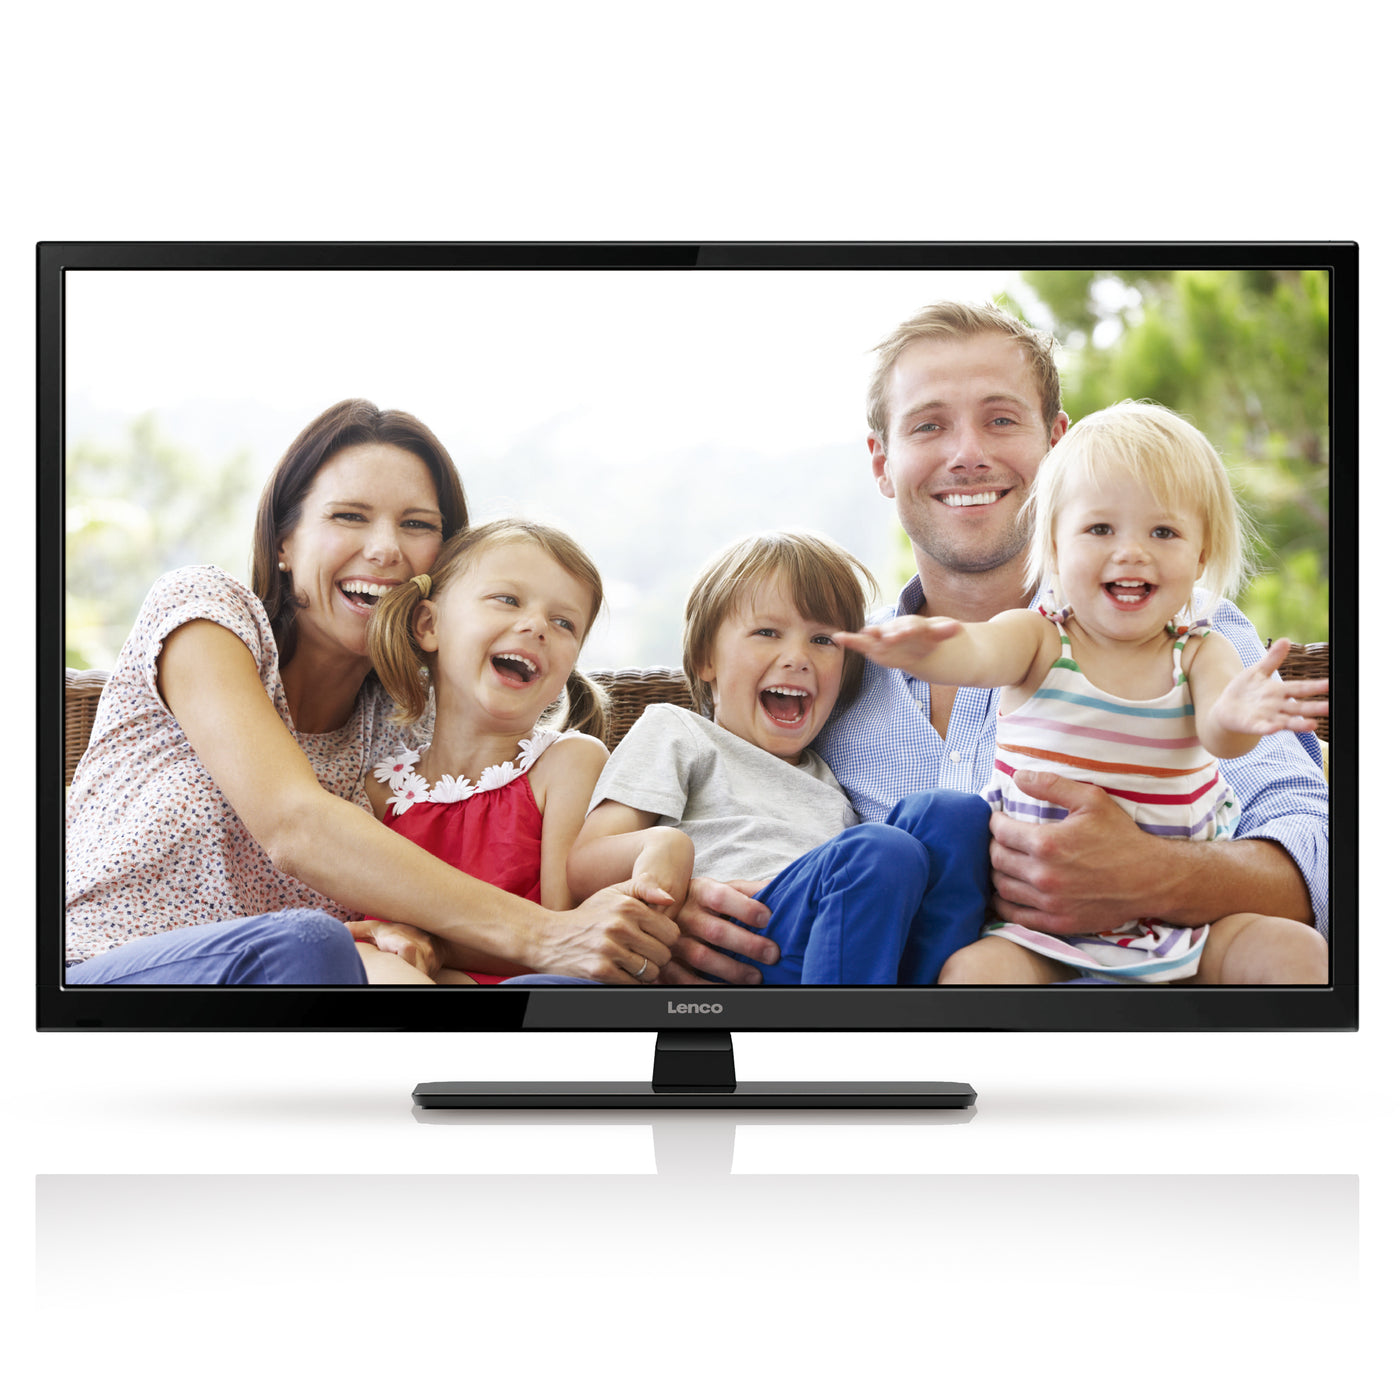 LENCO DVL-2862 - HD LED TV with 28 inch and DVB/T/T2/S2/C with integrated DVD player - Black